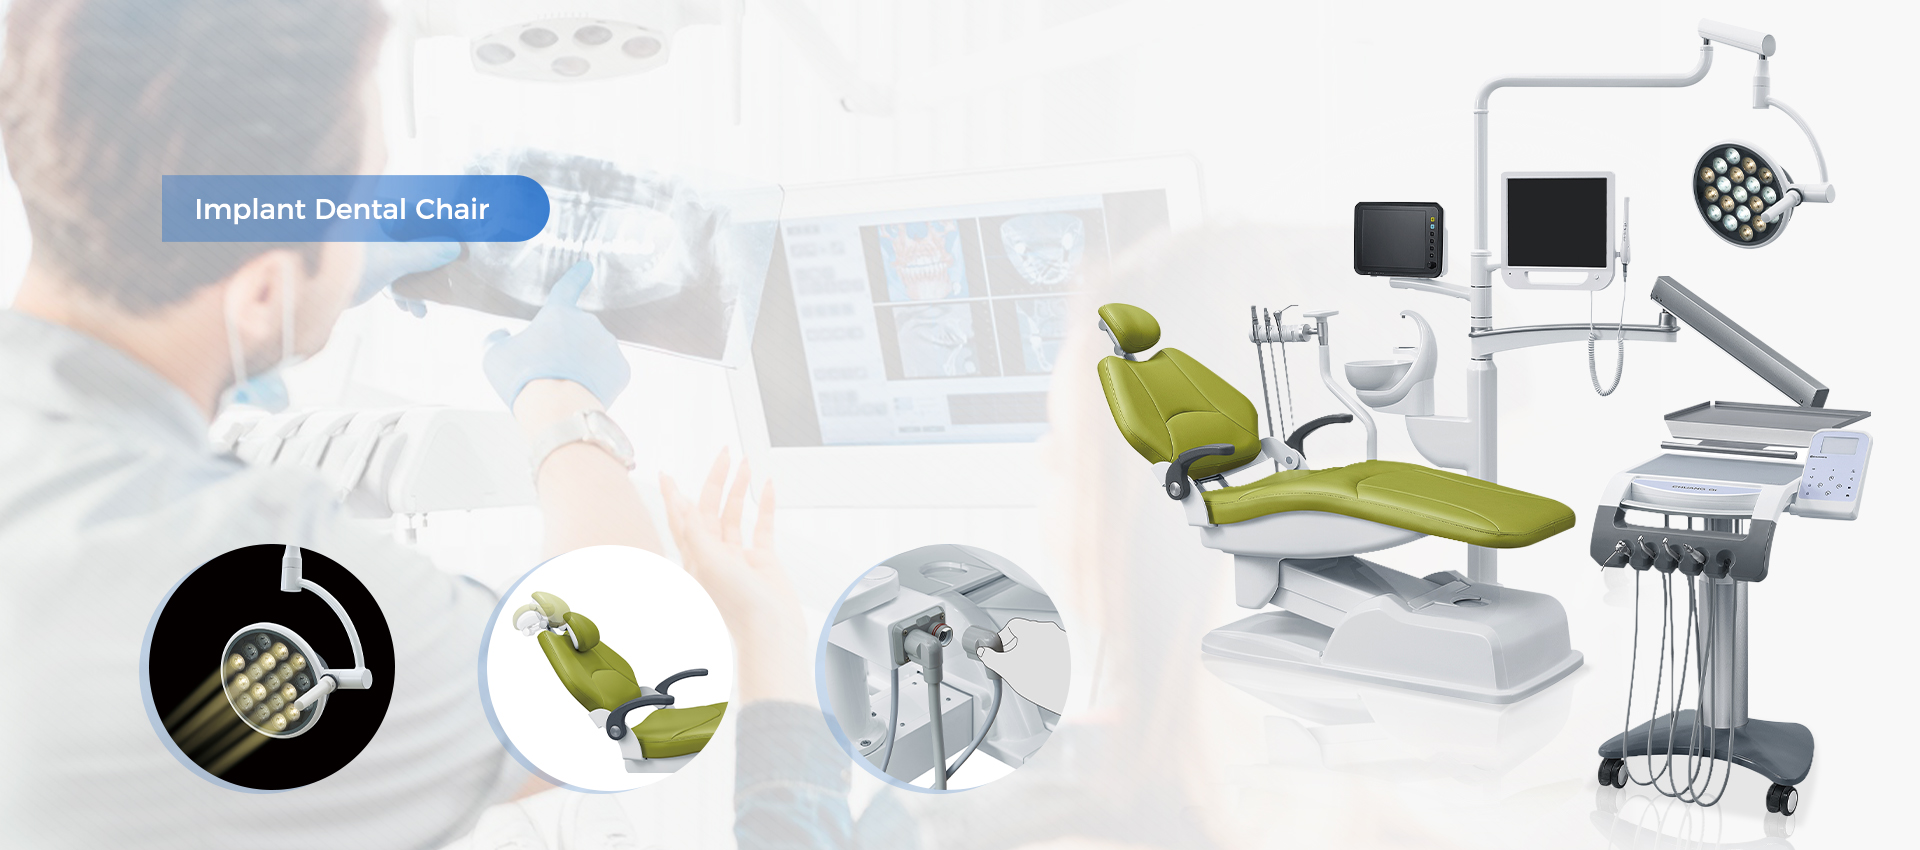 Implant Dental Chair Manufacturer